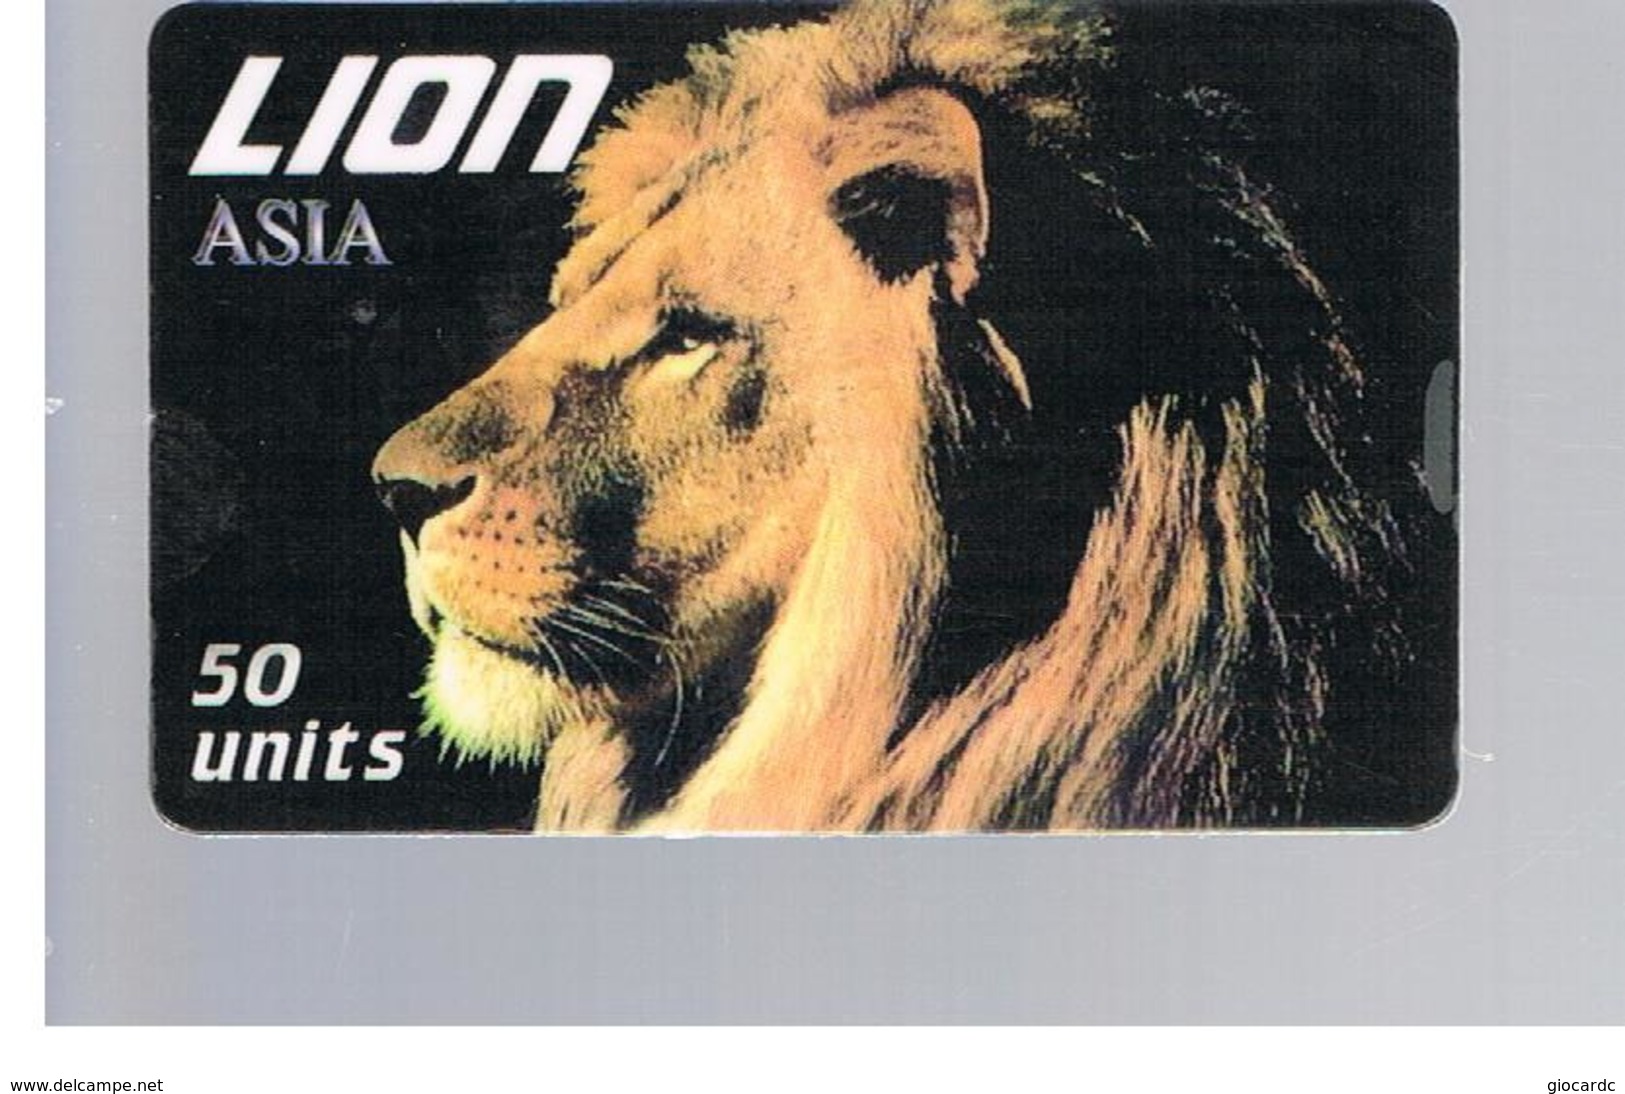 ITALIA (ITALY) - REMOTE - LION CARD -   ANIMALS , ASIA            - USED - RIF. 10931 - [2] Sim Cards, Prepaid & Refills